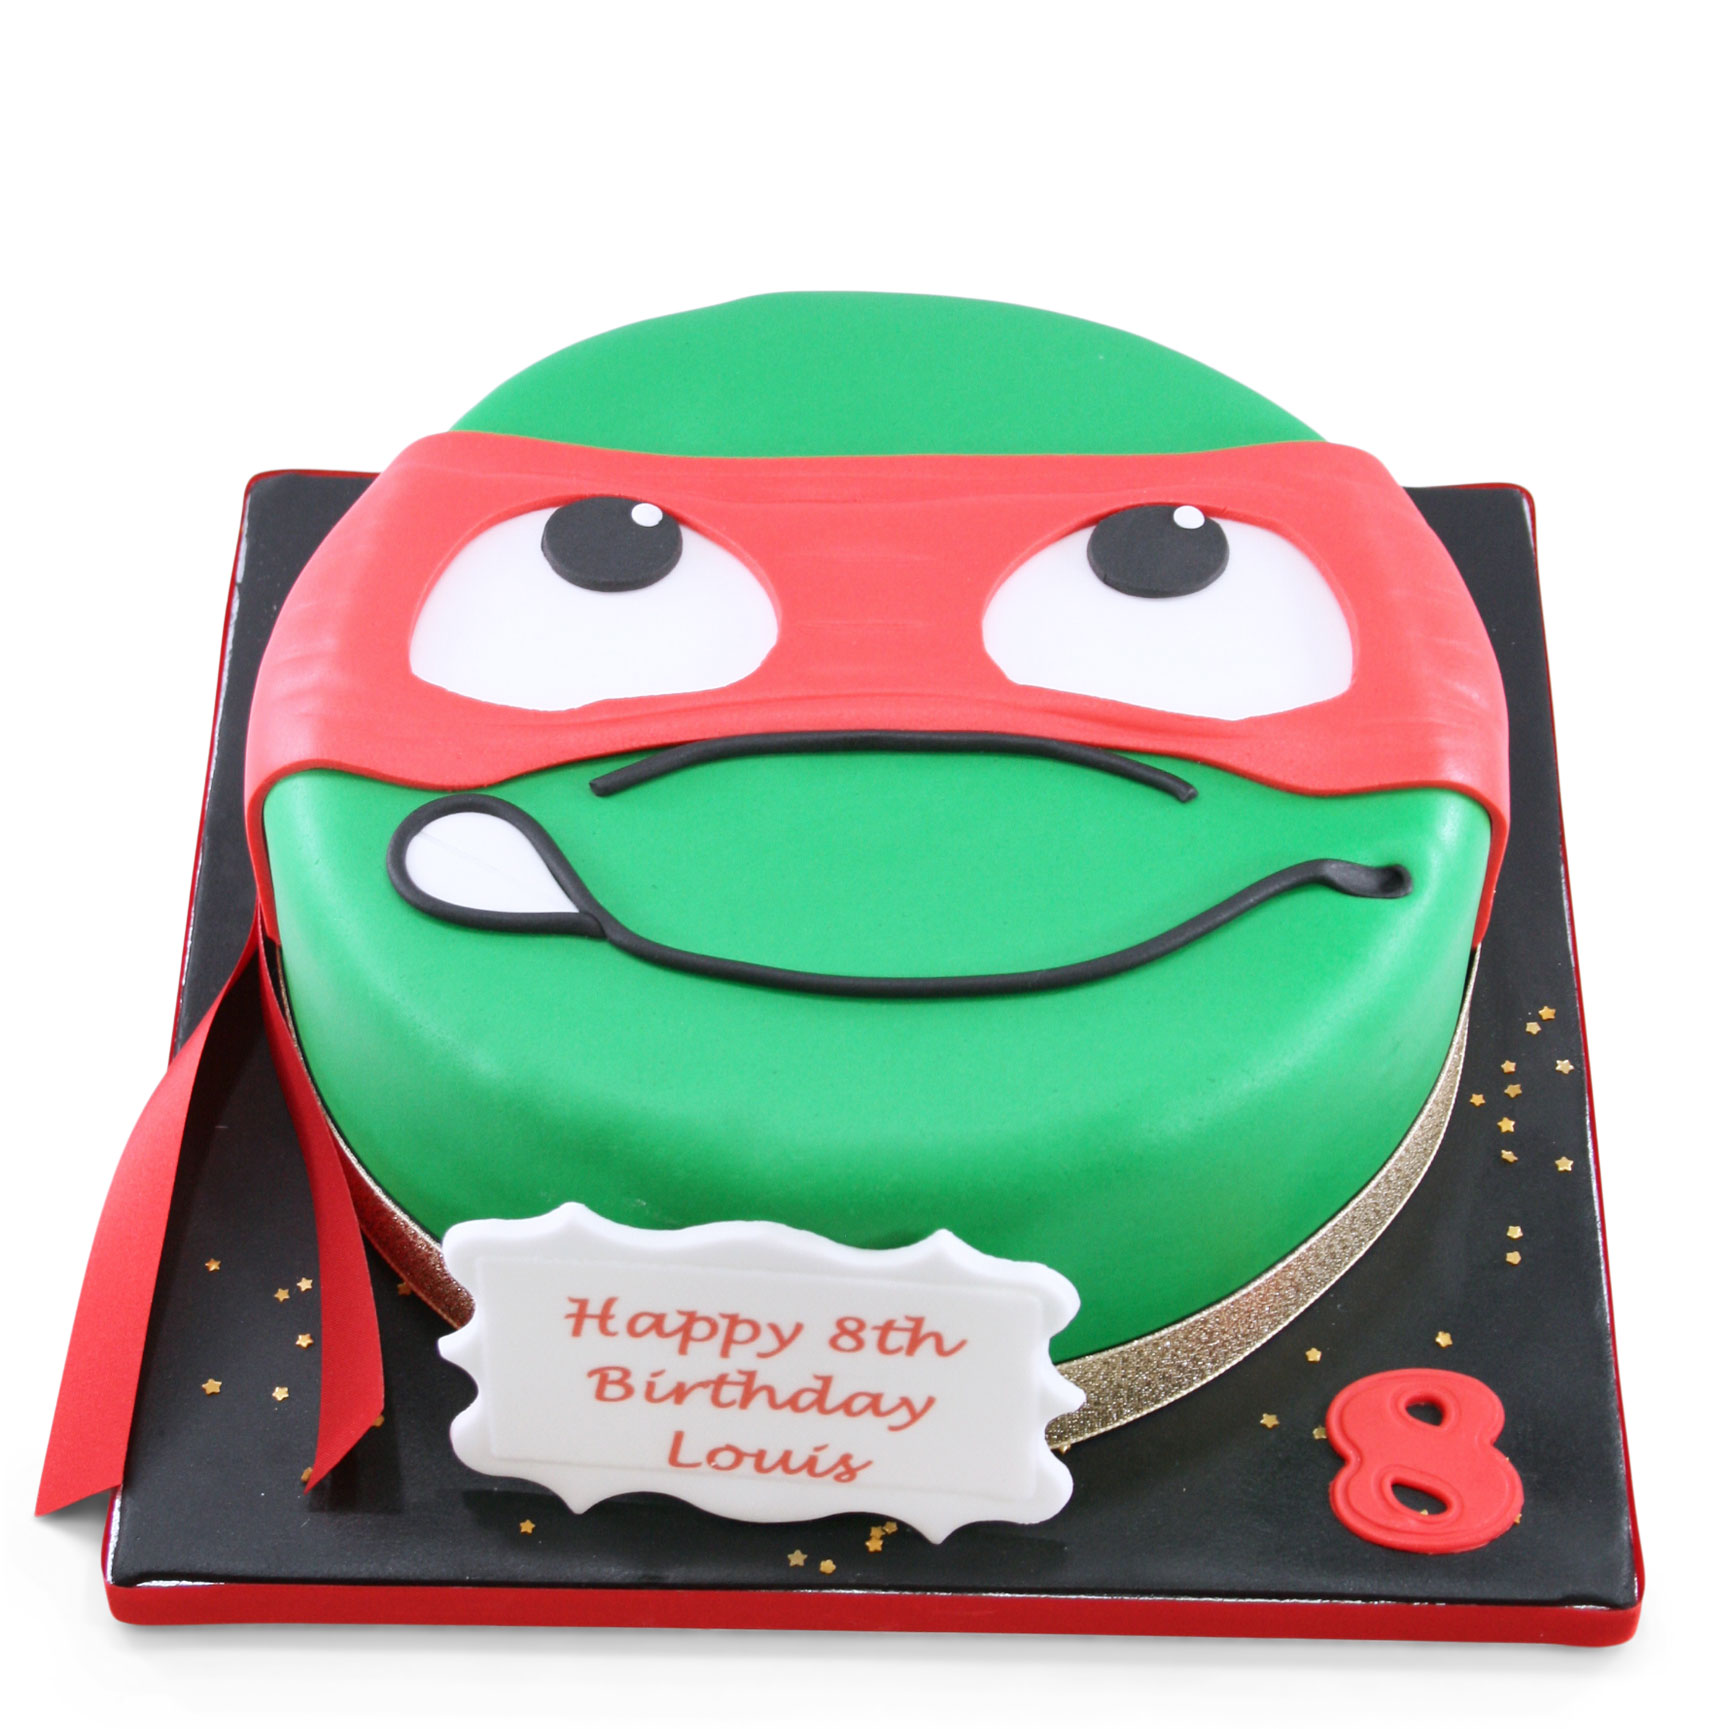 Teenage Mutant Ninja Turtles cake [pic] - Global Geek News